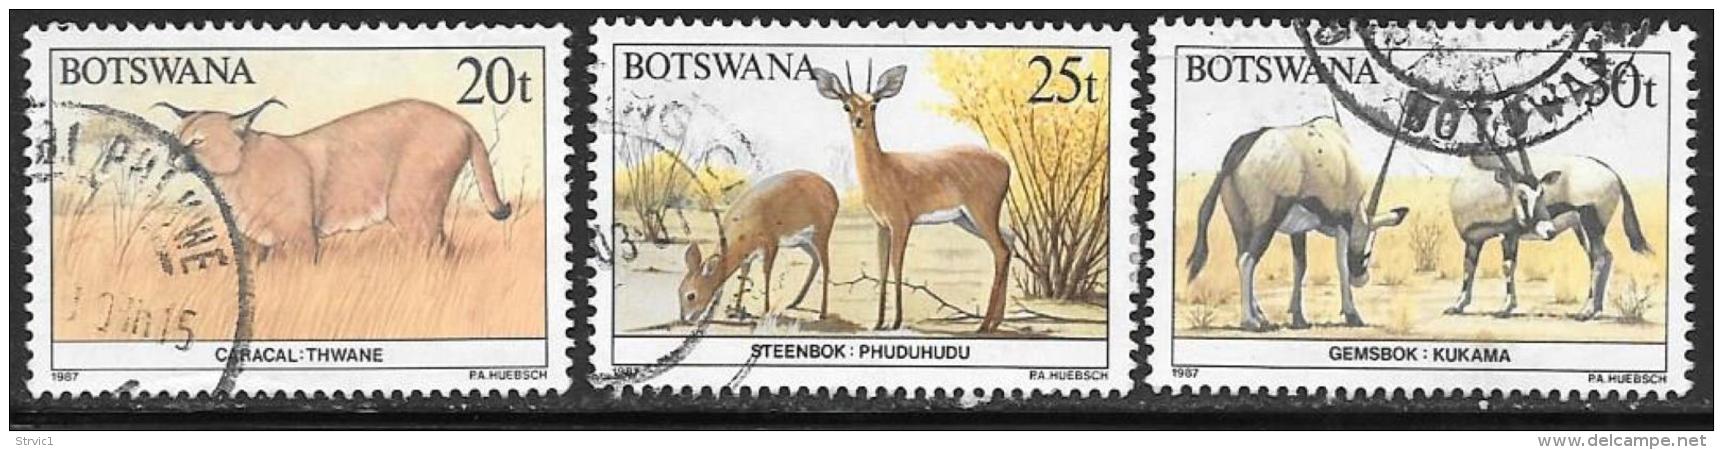 Botswana, Scott # 414-6 Used Wildlife Conservation, 1987 - Botswana (1966-...)